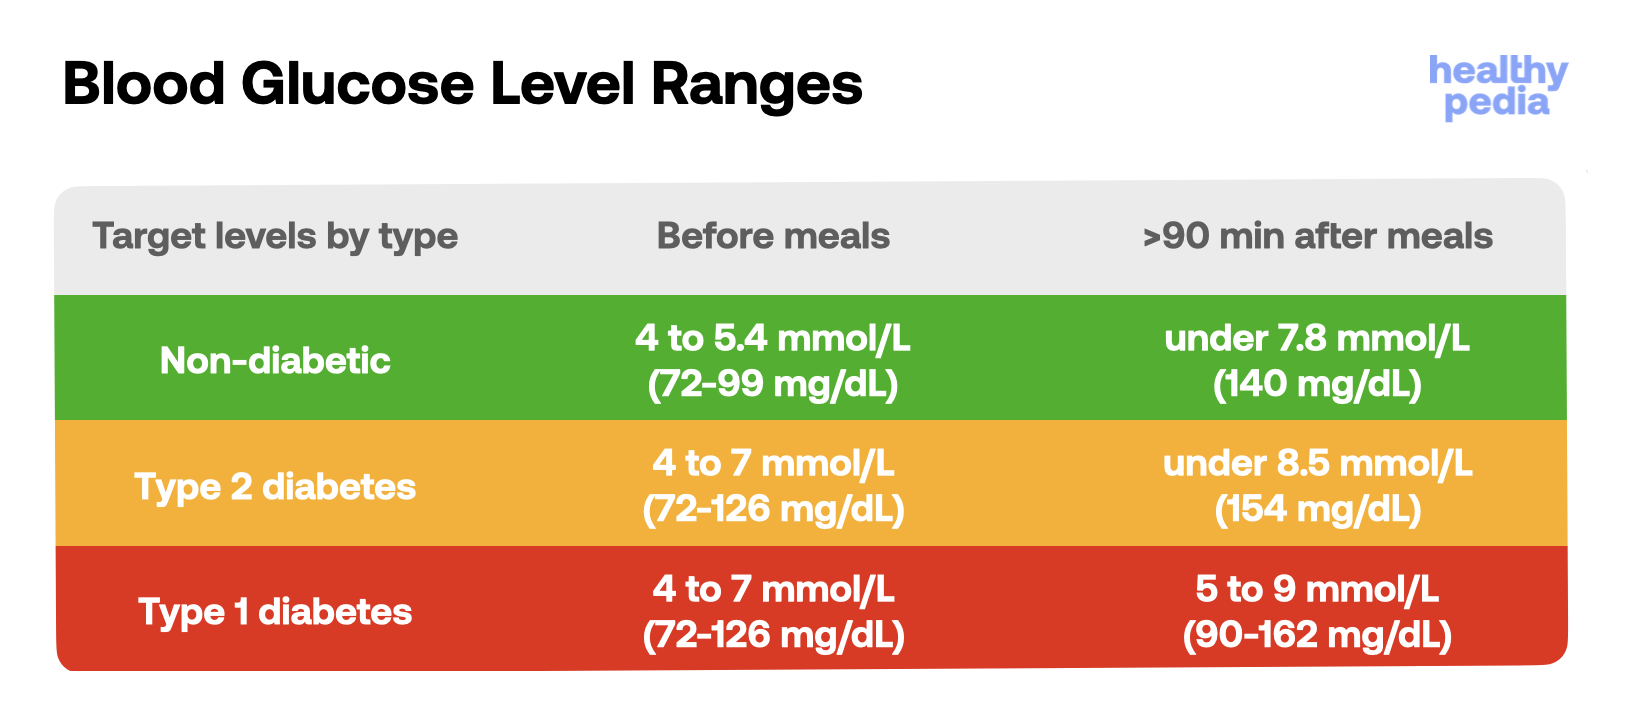 Blood Glucose Level Ranges, stats